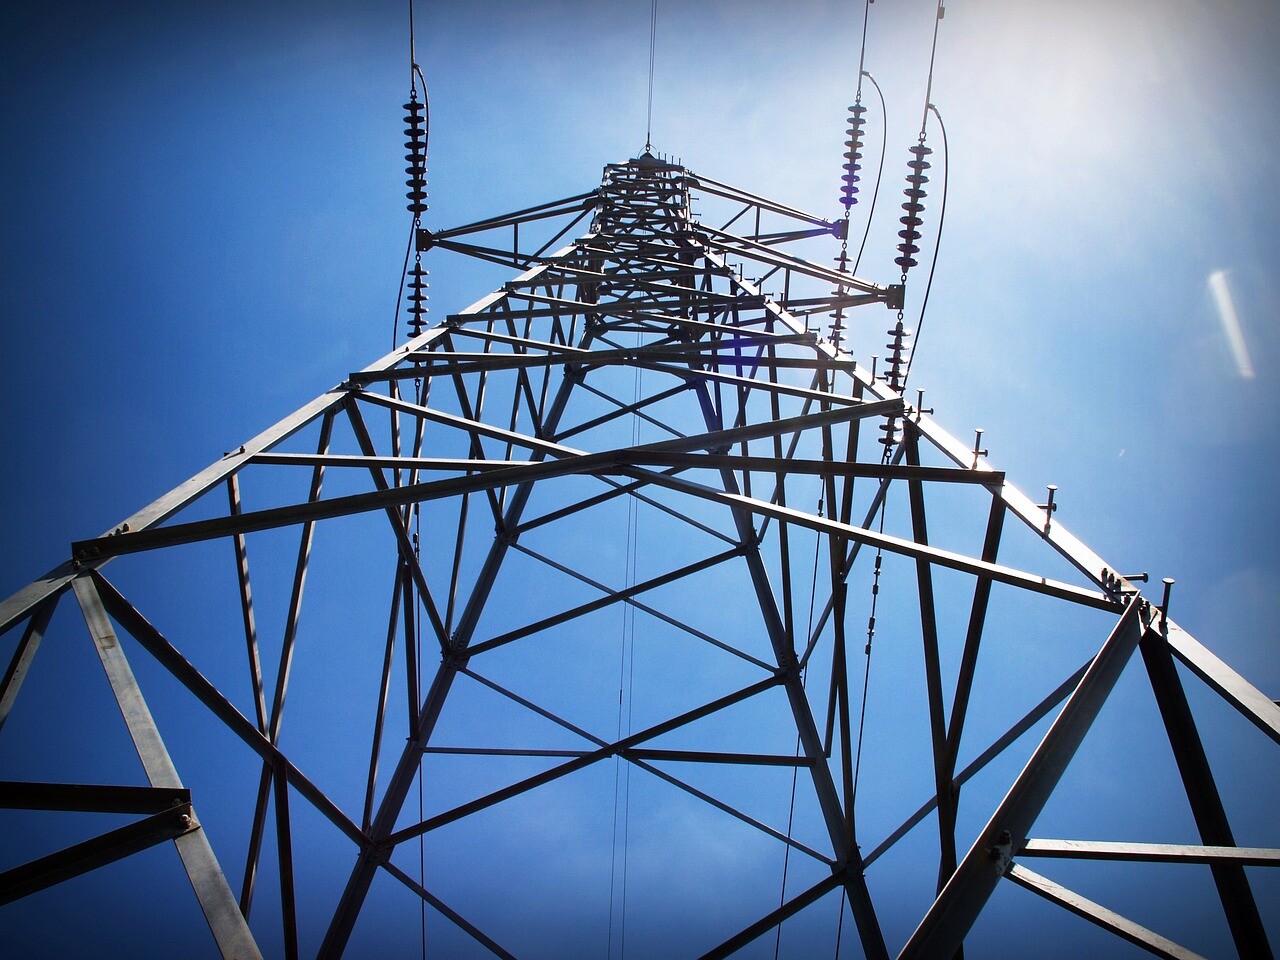 More information about "Υπογειοποίηση του δικτύου ρεύματος σε 62 περιοχές"